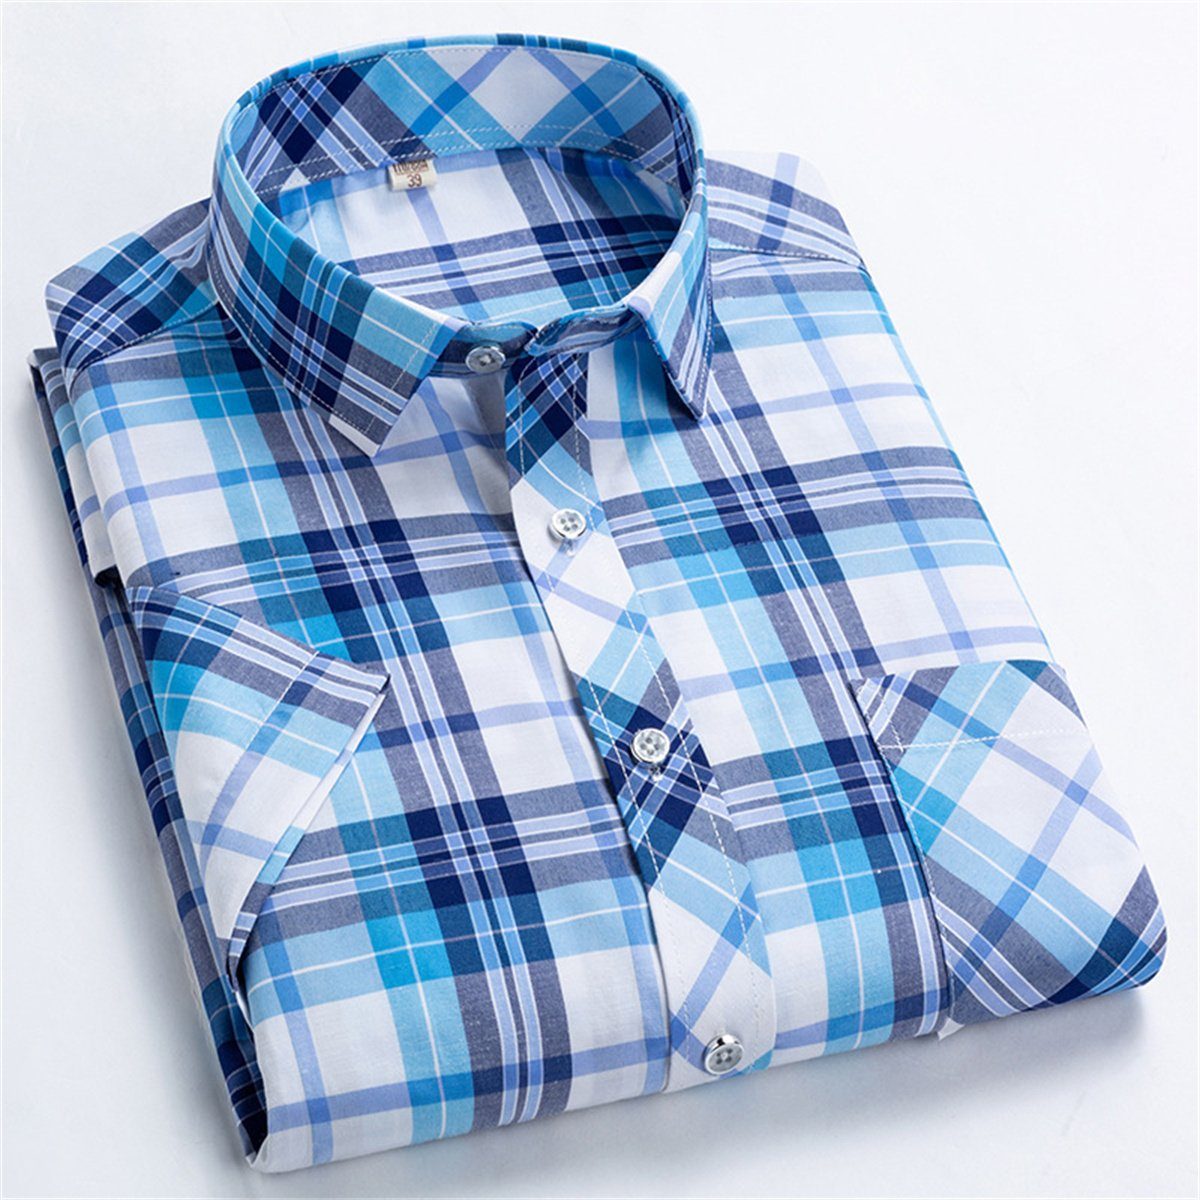 Discaver Trachtenhemd Herrenhemd, reguläre Passform, kurzärmlig, lässiges Popeline-Hemd hellblau